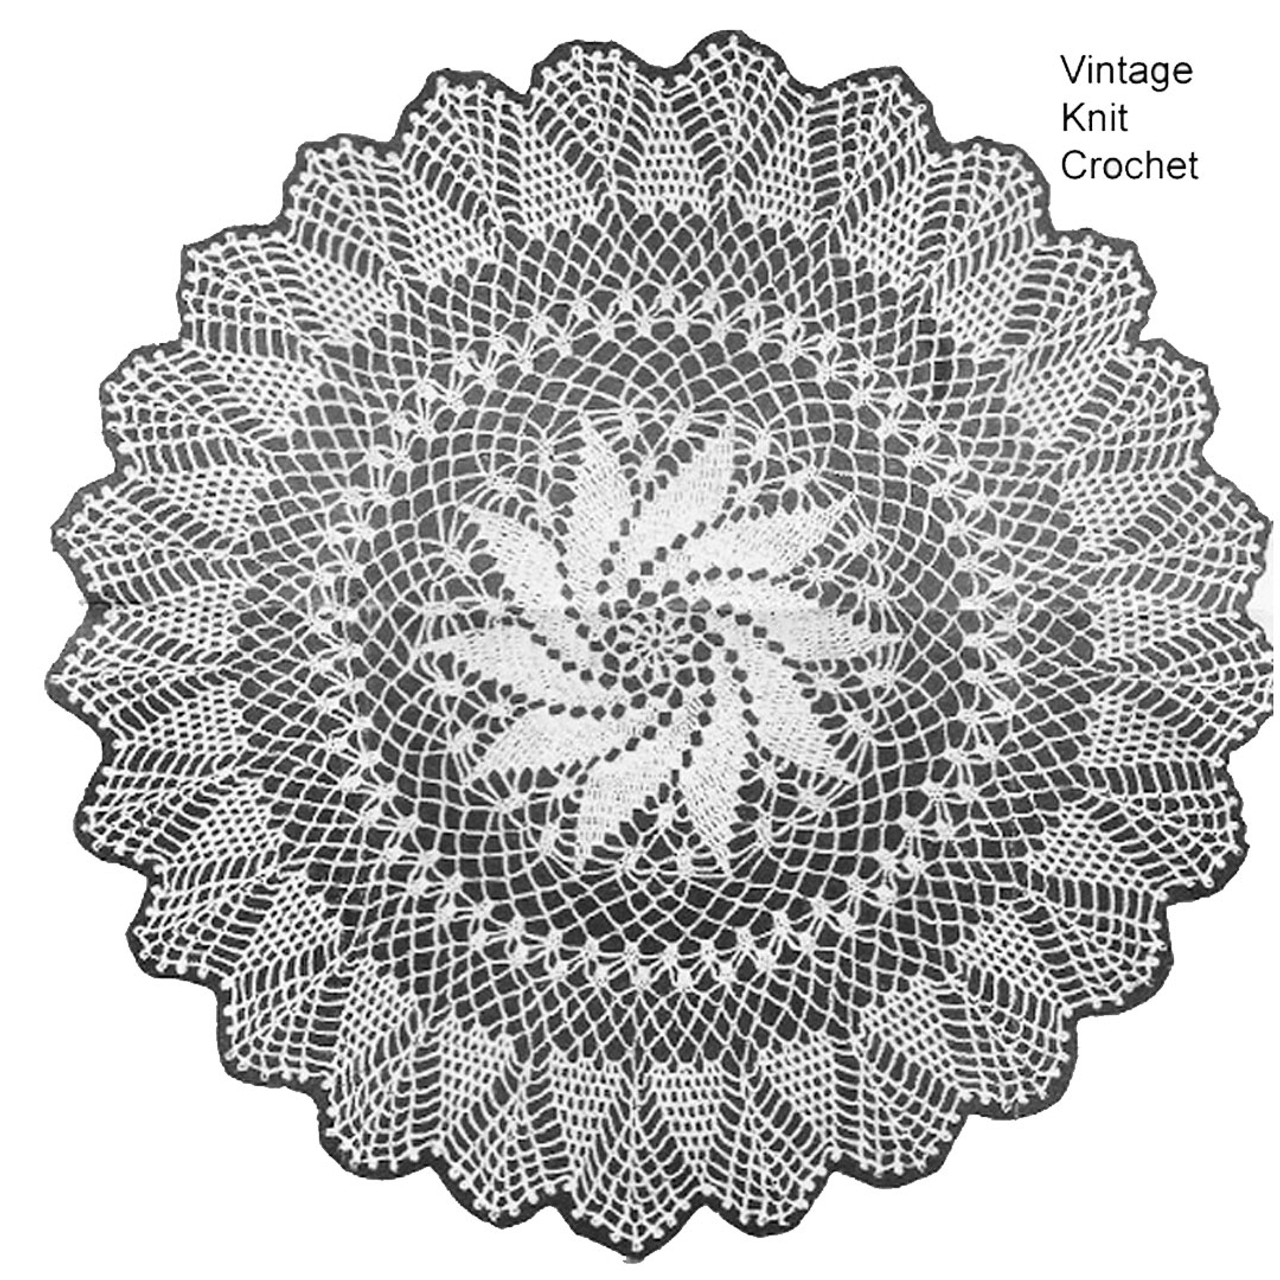 Pinwheel crocheted doily pattern illustration, Anne Cabot No 5734